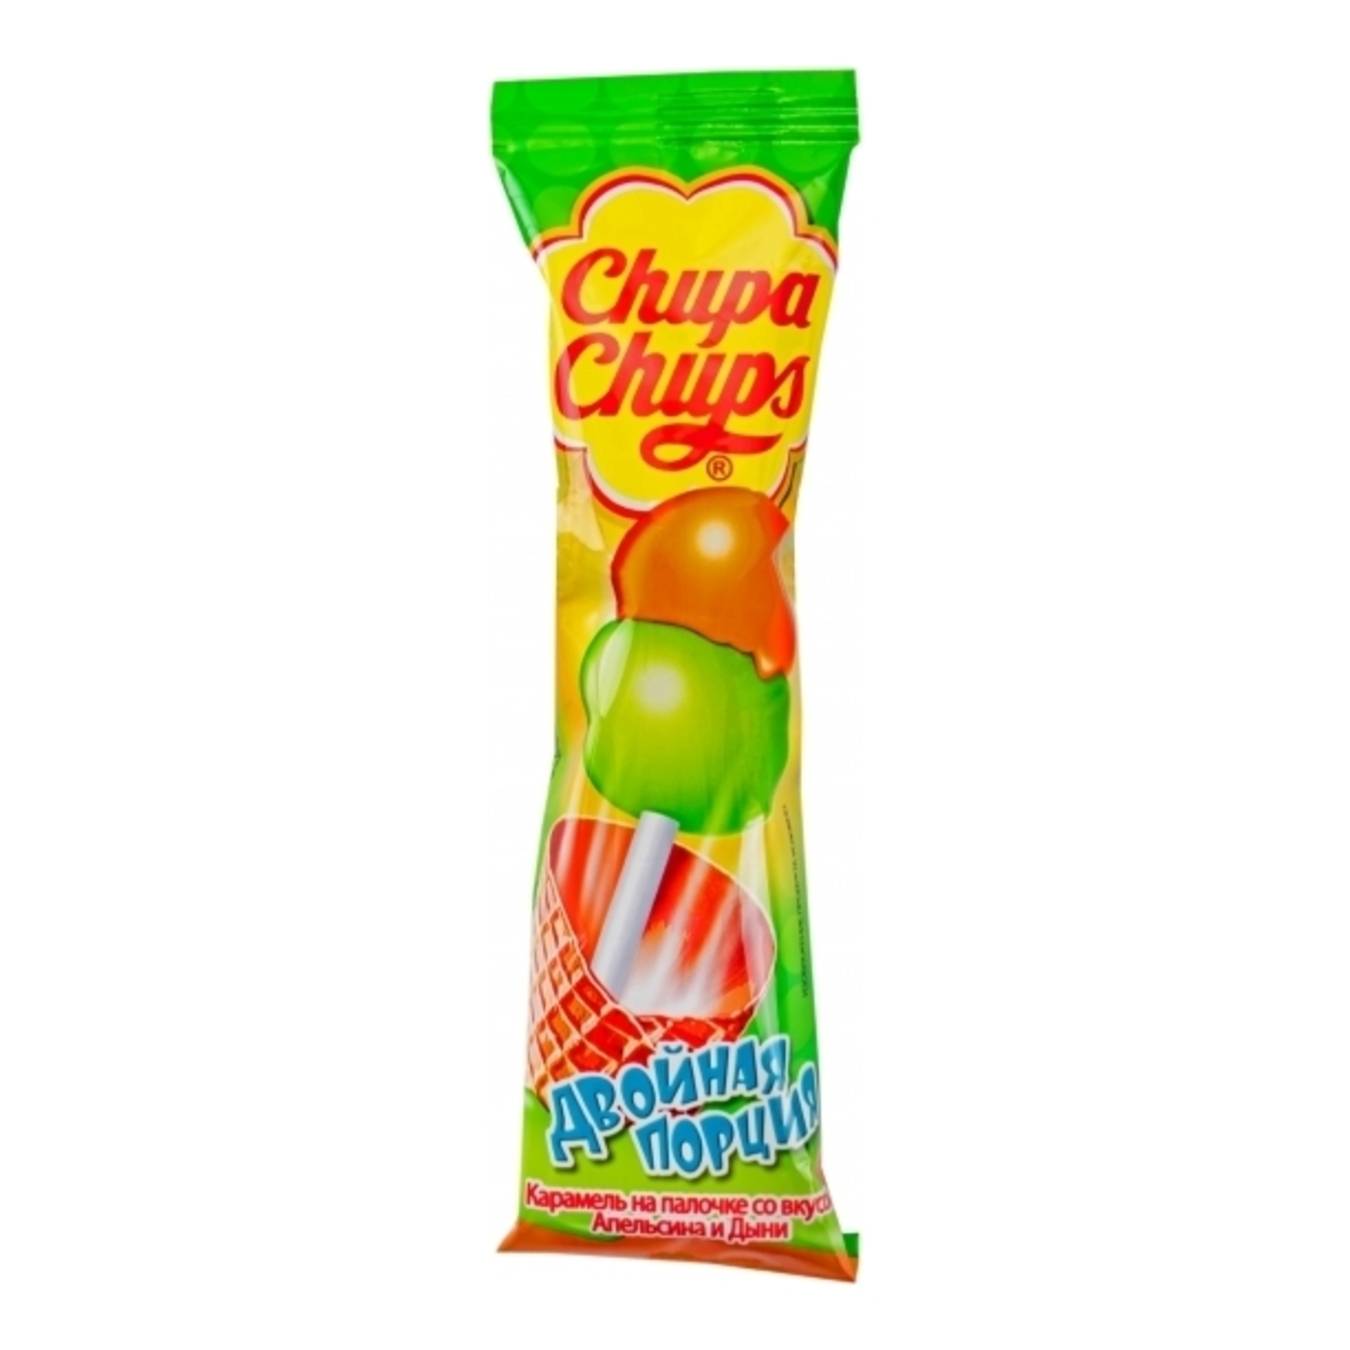 Chupa chups Double portion caramel 16,8g